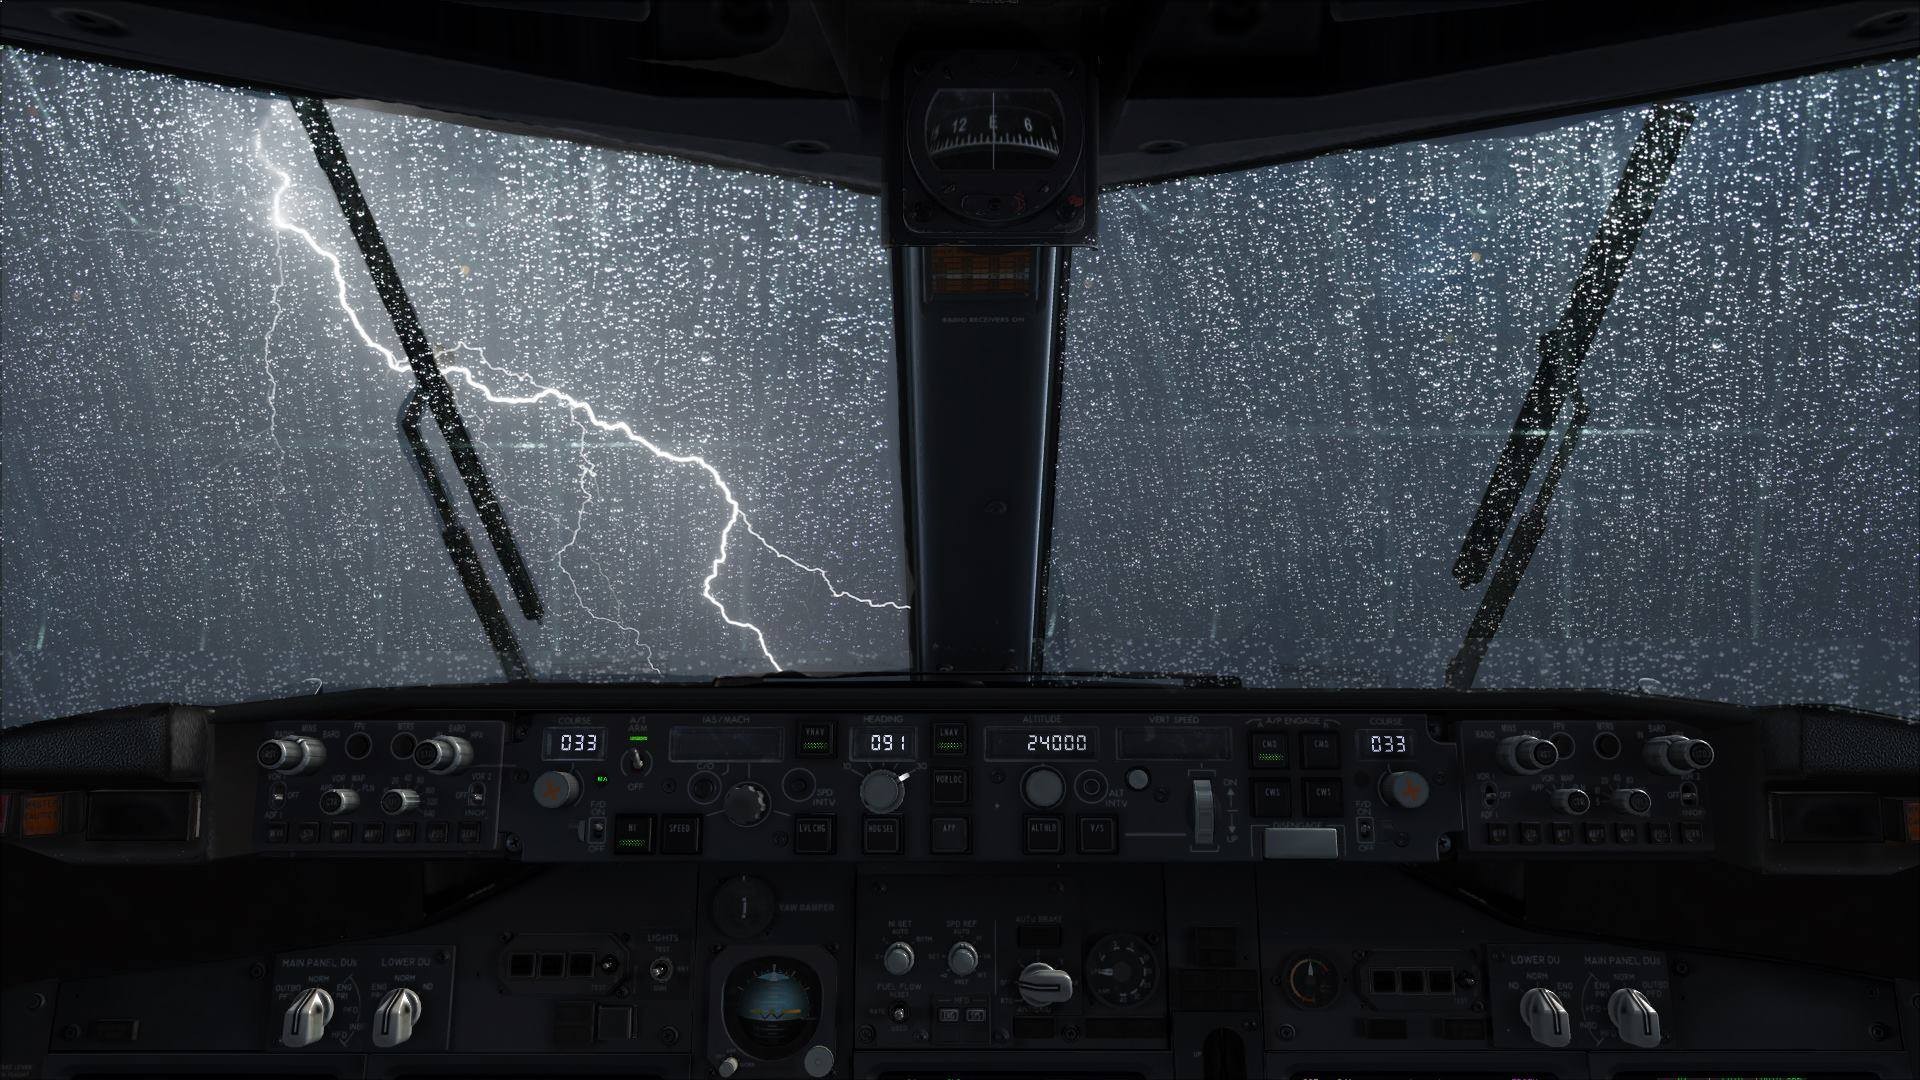 General 1920x1080 airplane lightning rain water on glass Boeing aircraft storm vehicle cockpit flight simulator screen shot